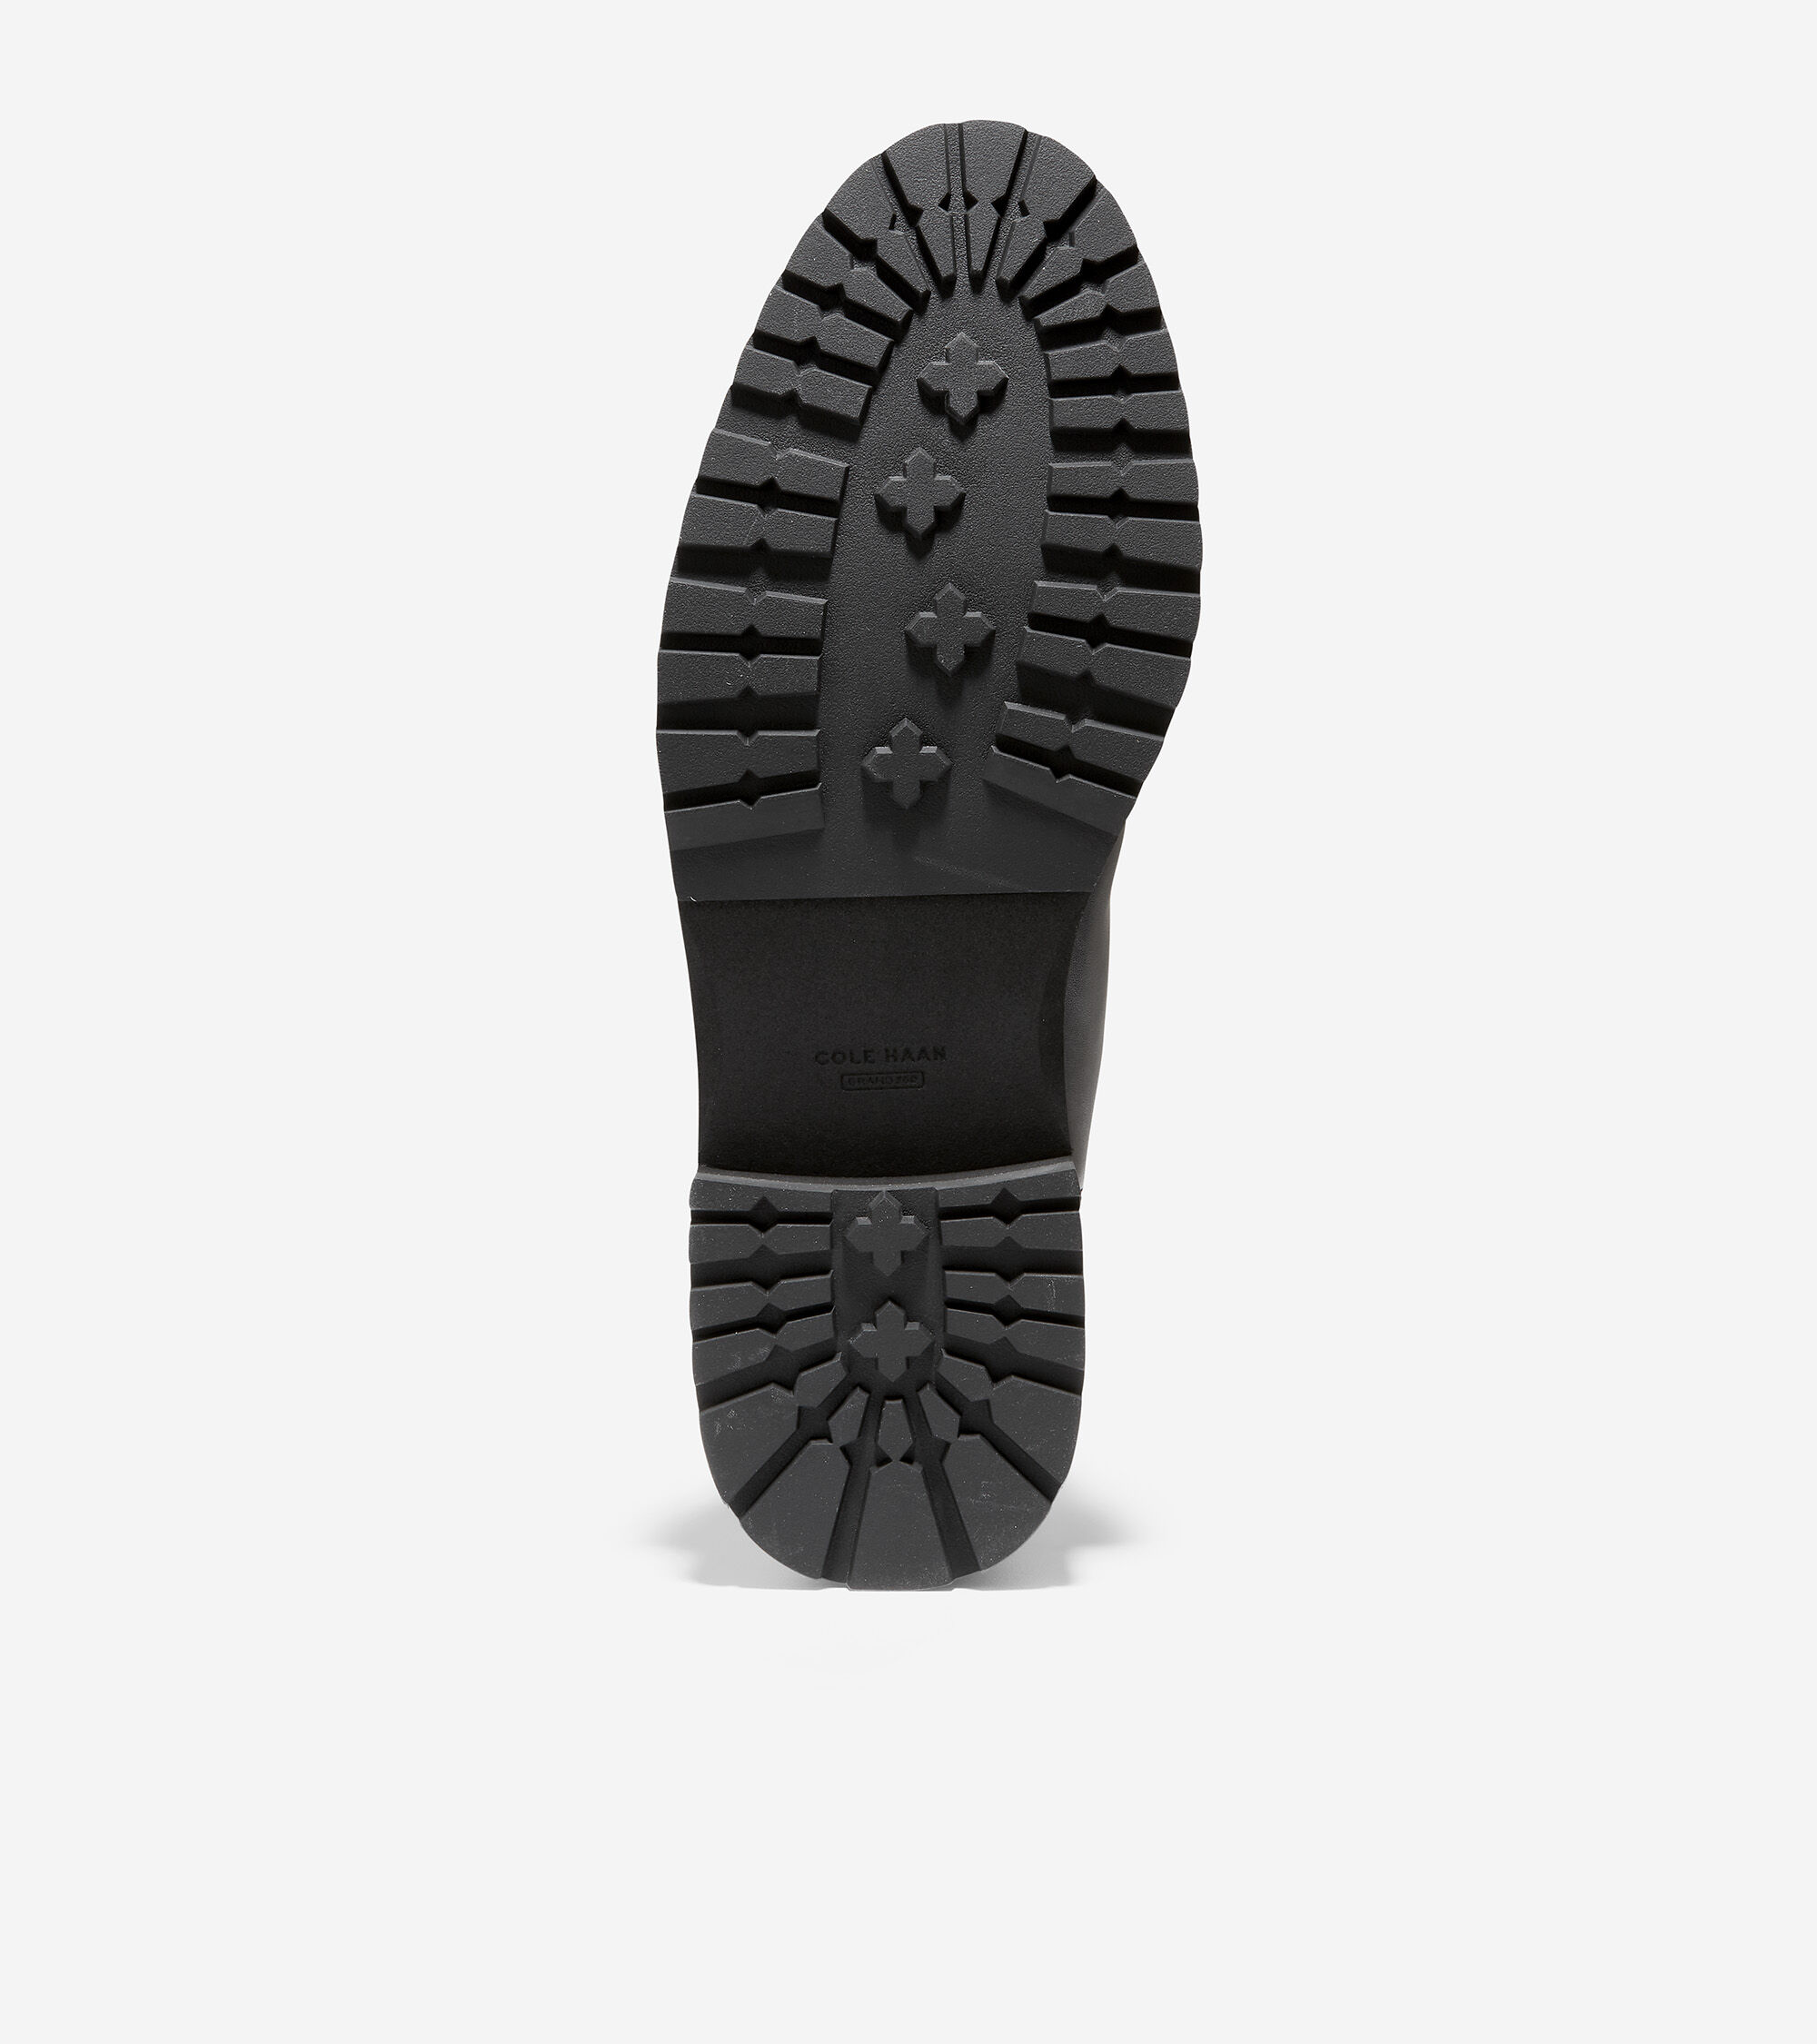 discount 86% NoName boots Black 36                  EU WOMEN FASHION Footwear Waterproof Boots 